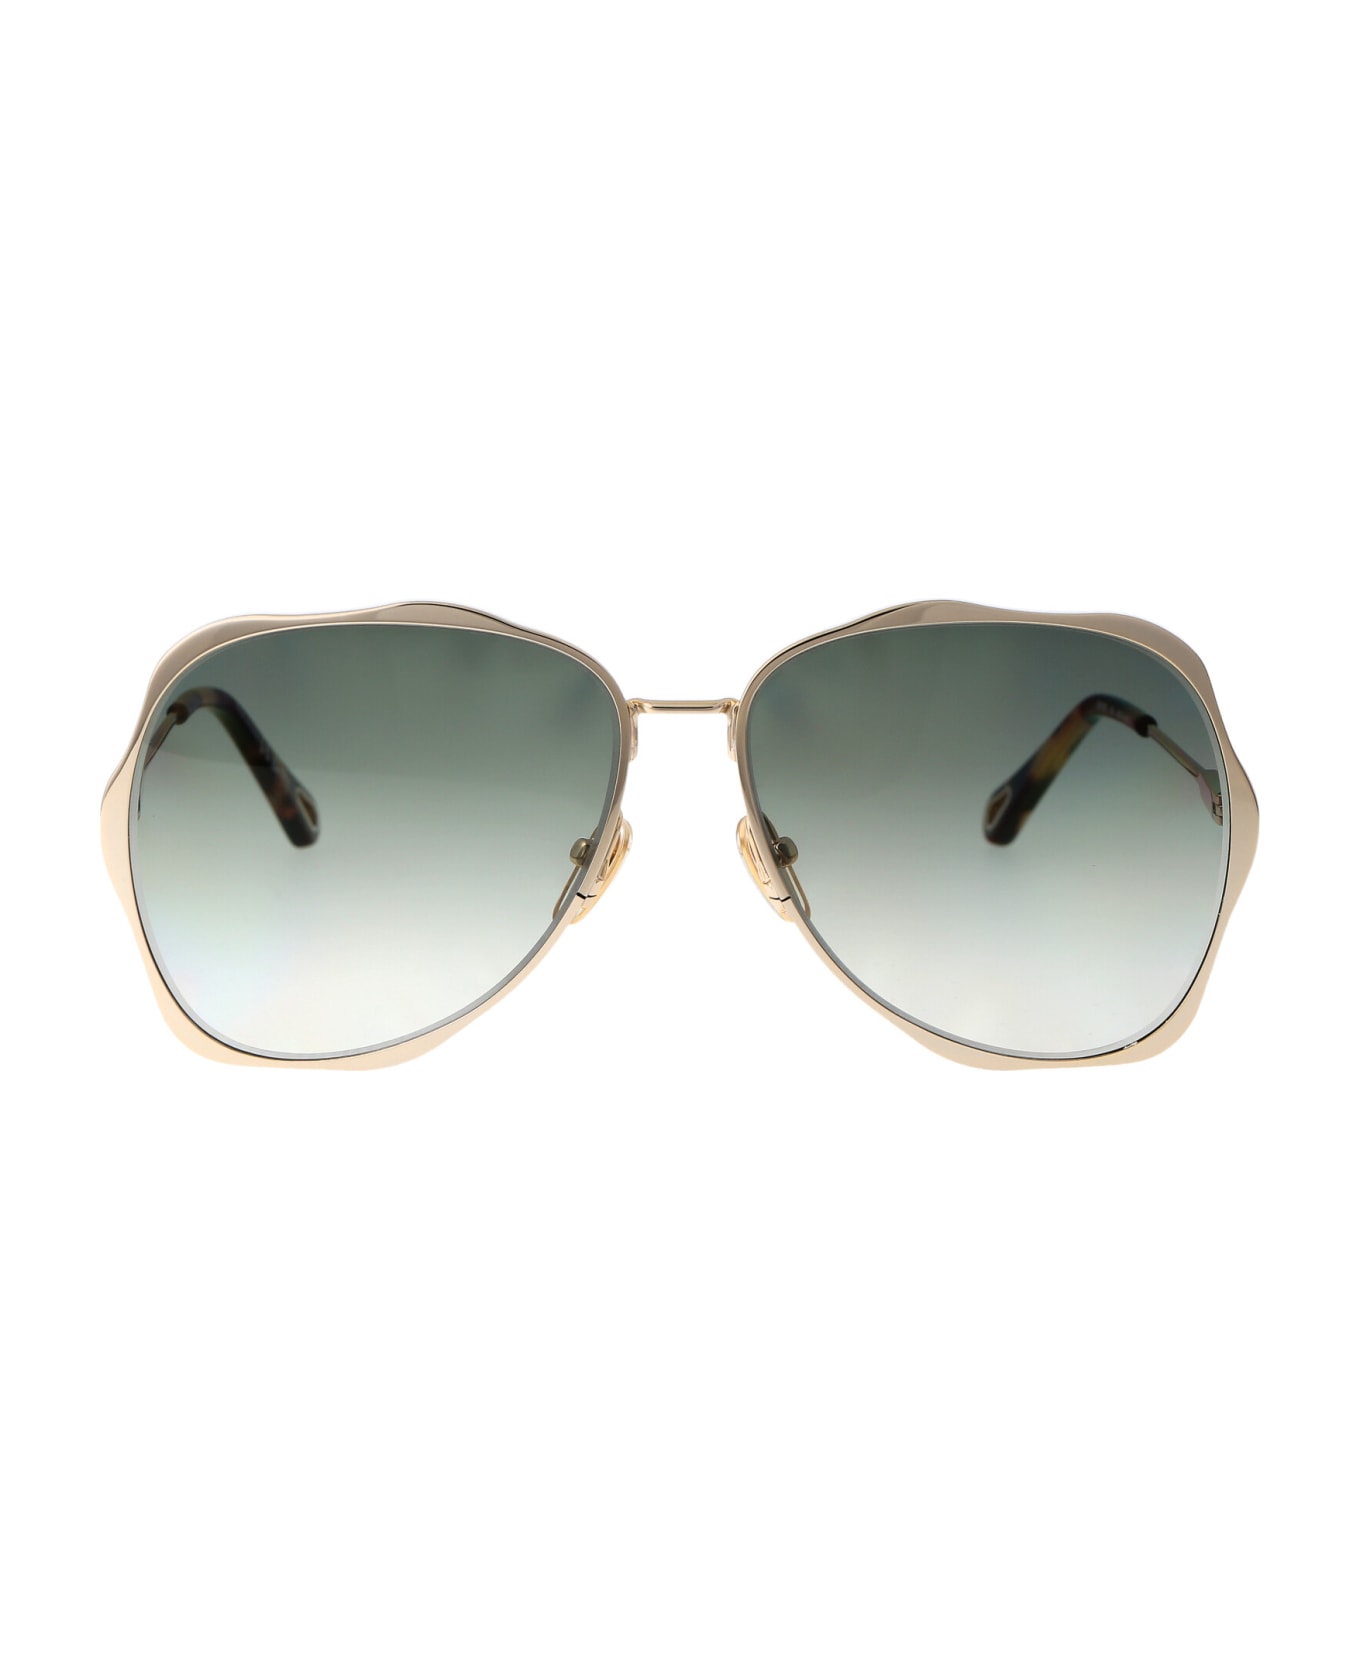 Chloé Eyewear Ch0183s Sunglasses - 004 GOLD GOLD GREEN